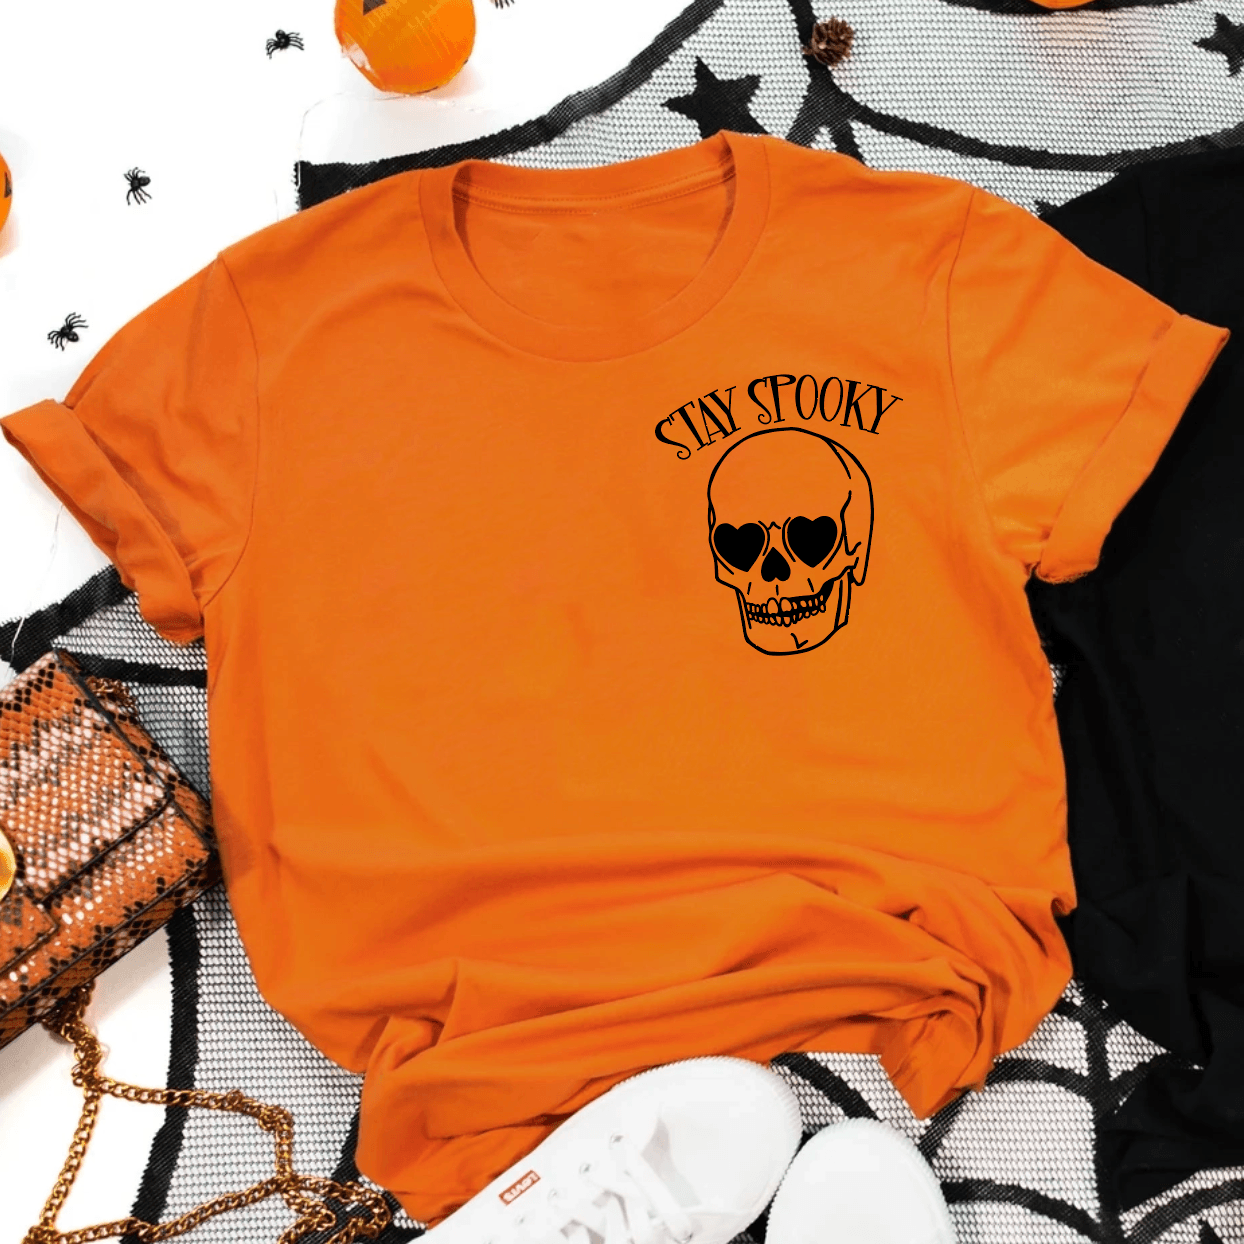 Stay Spooky(orange pocket tee) - Signastyle Boutique